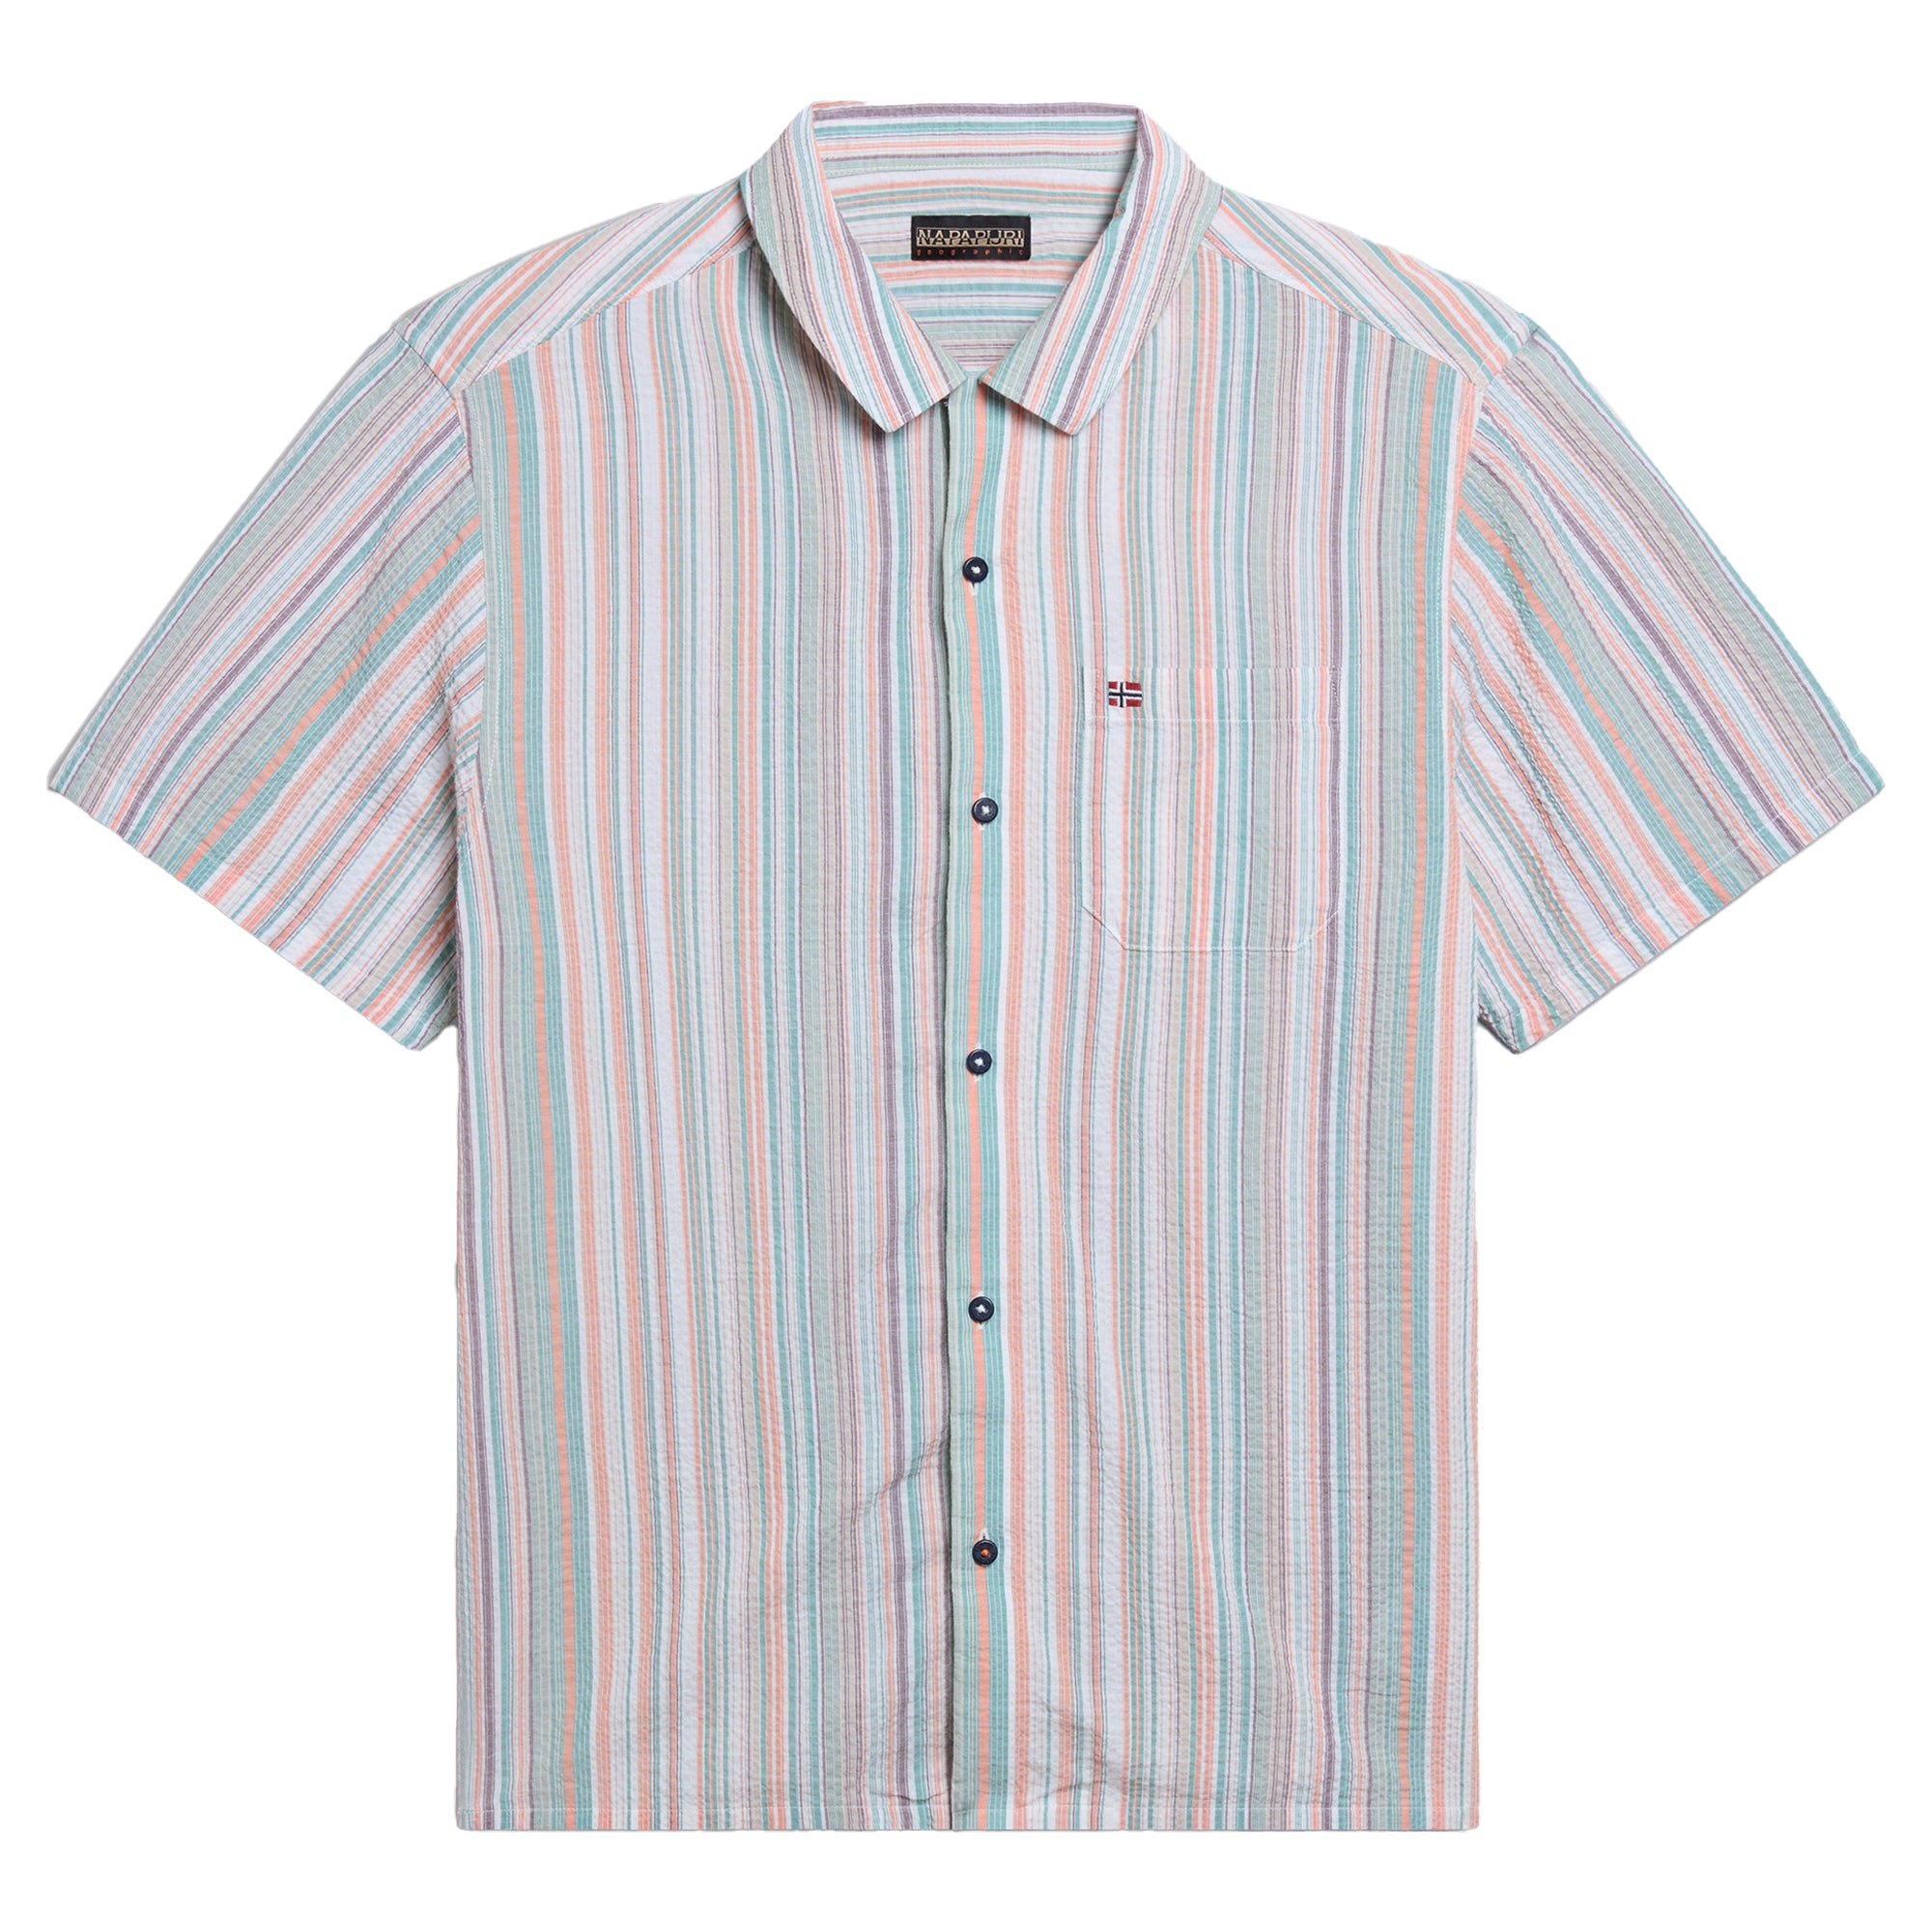 Napapijri G-Tulita Short Sleeve Shirt - Stripe